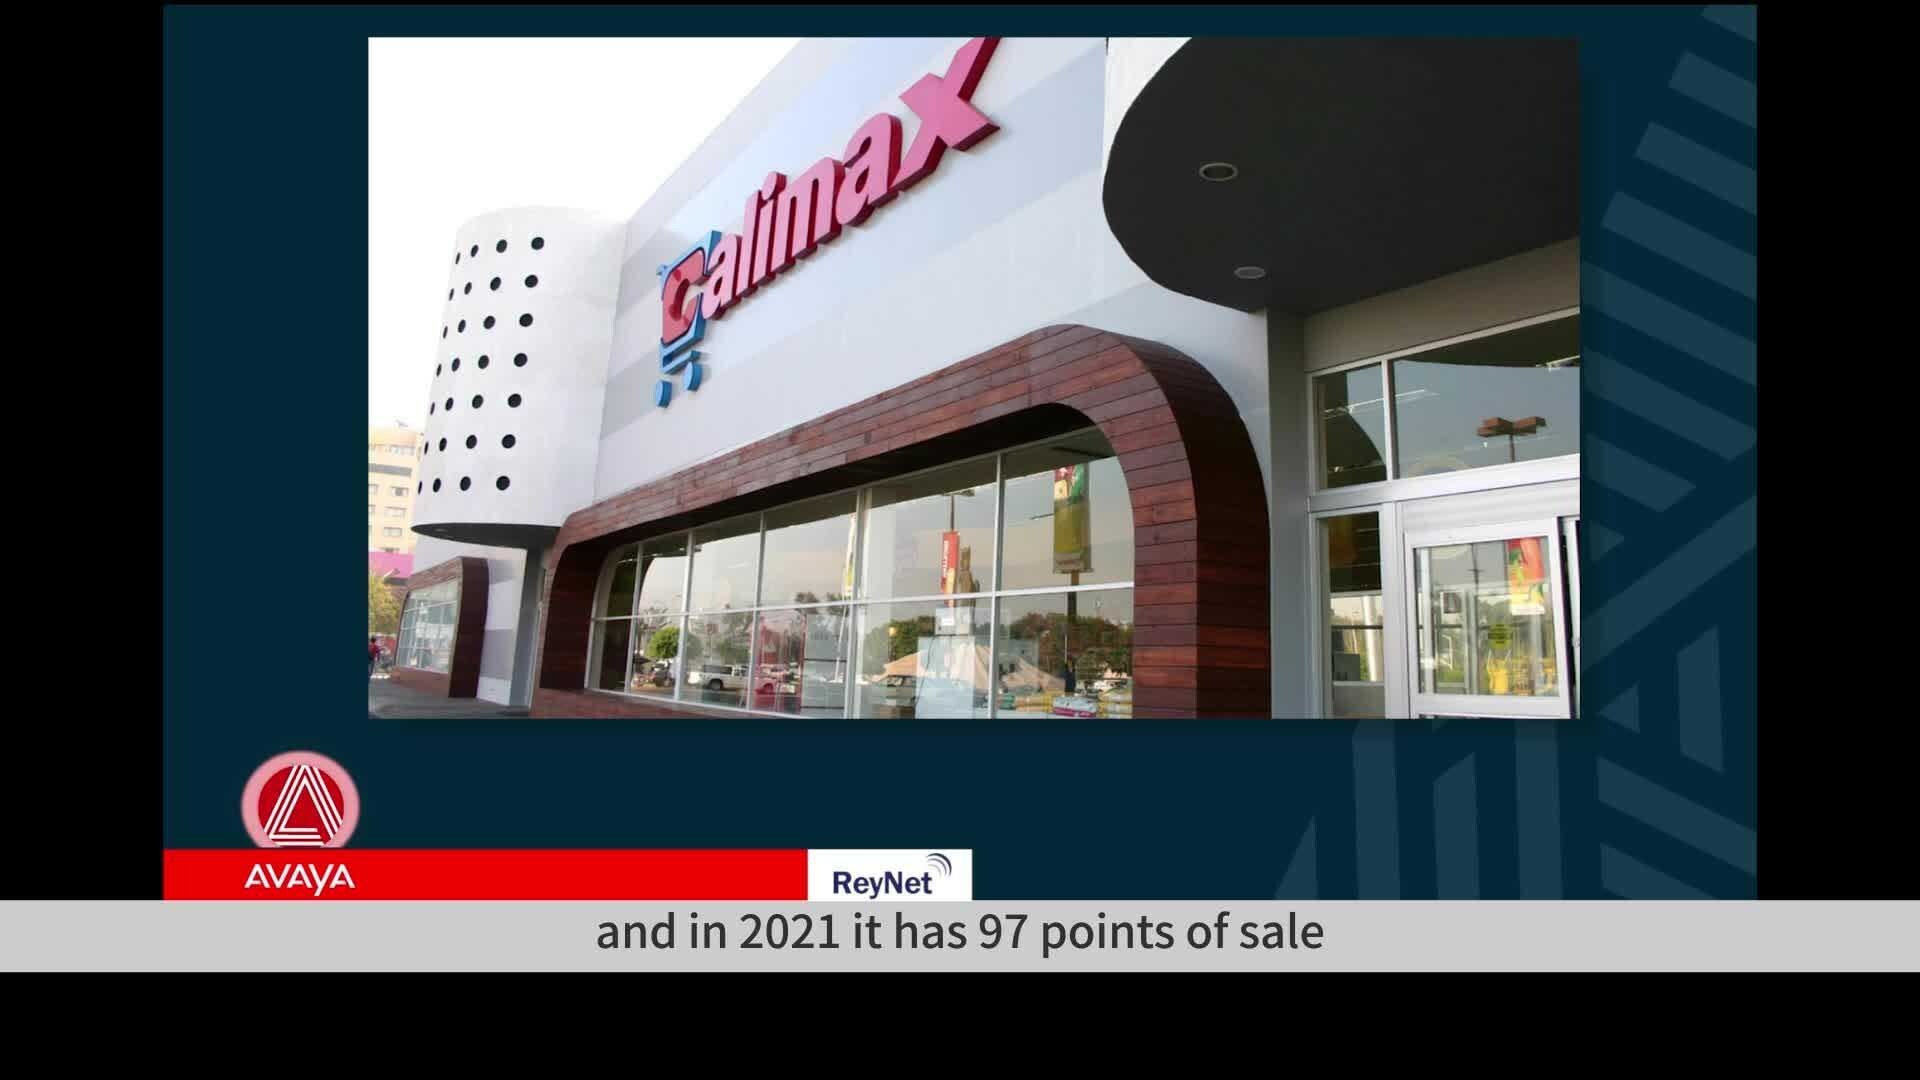 Calimax: Maximum quality, 1000% sales